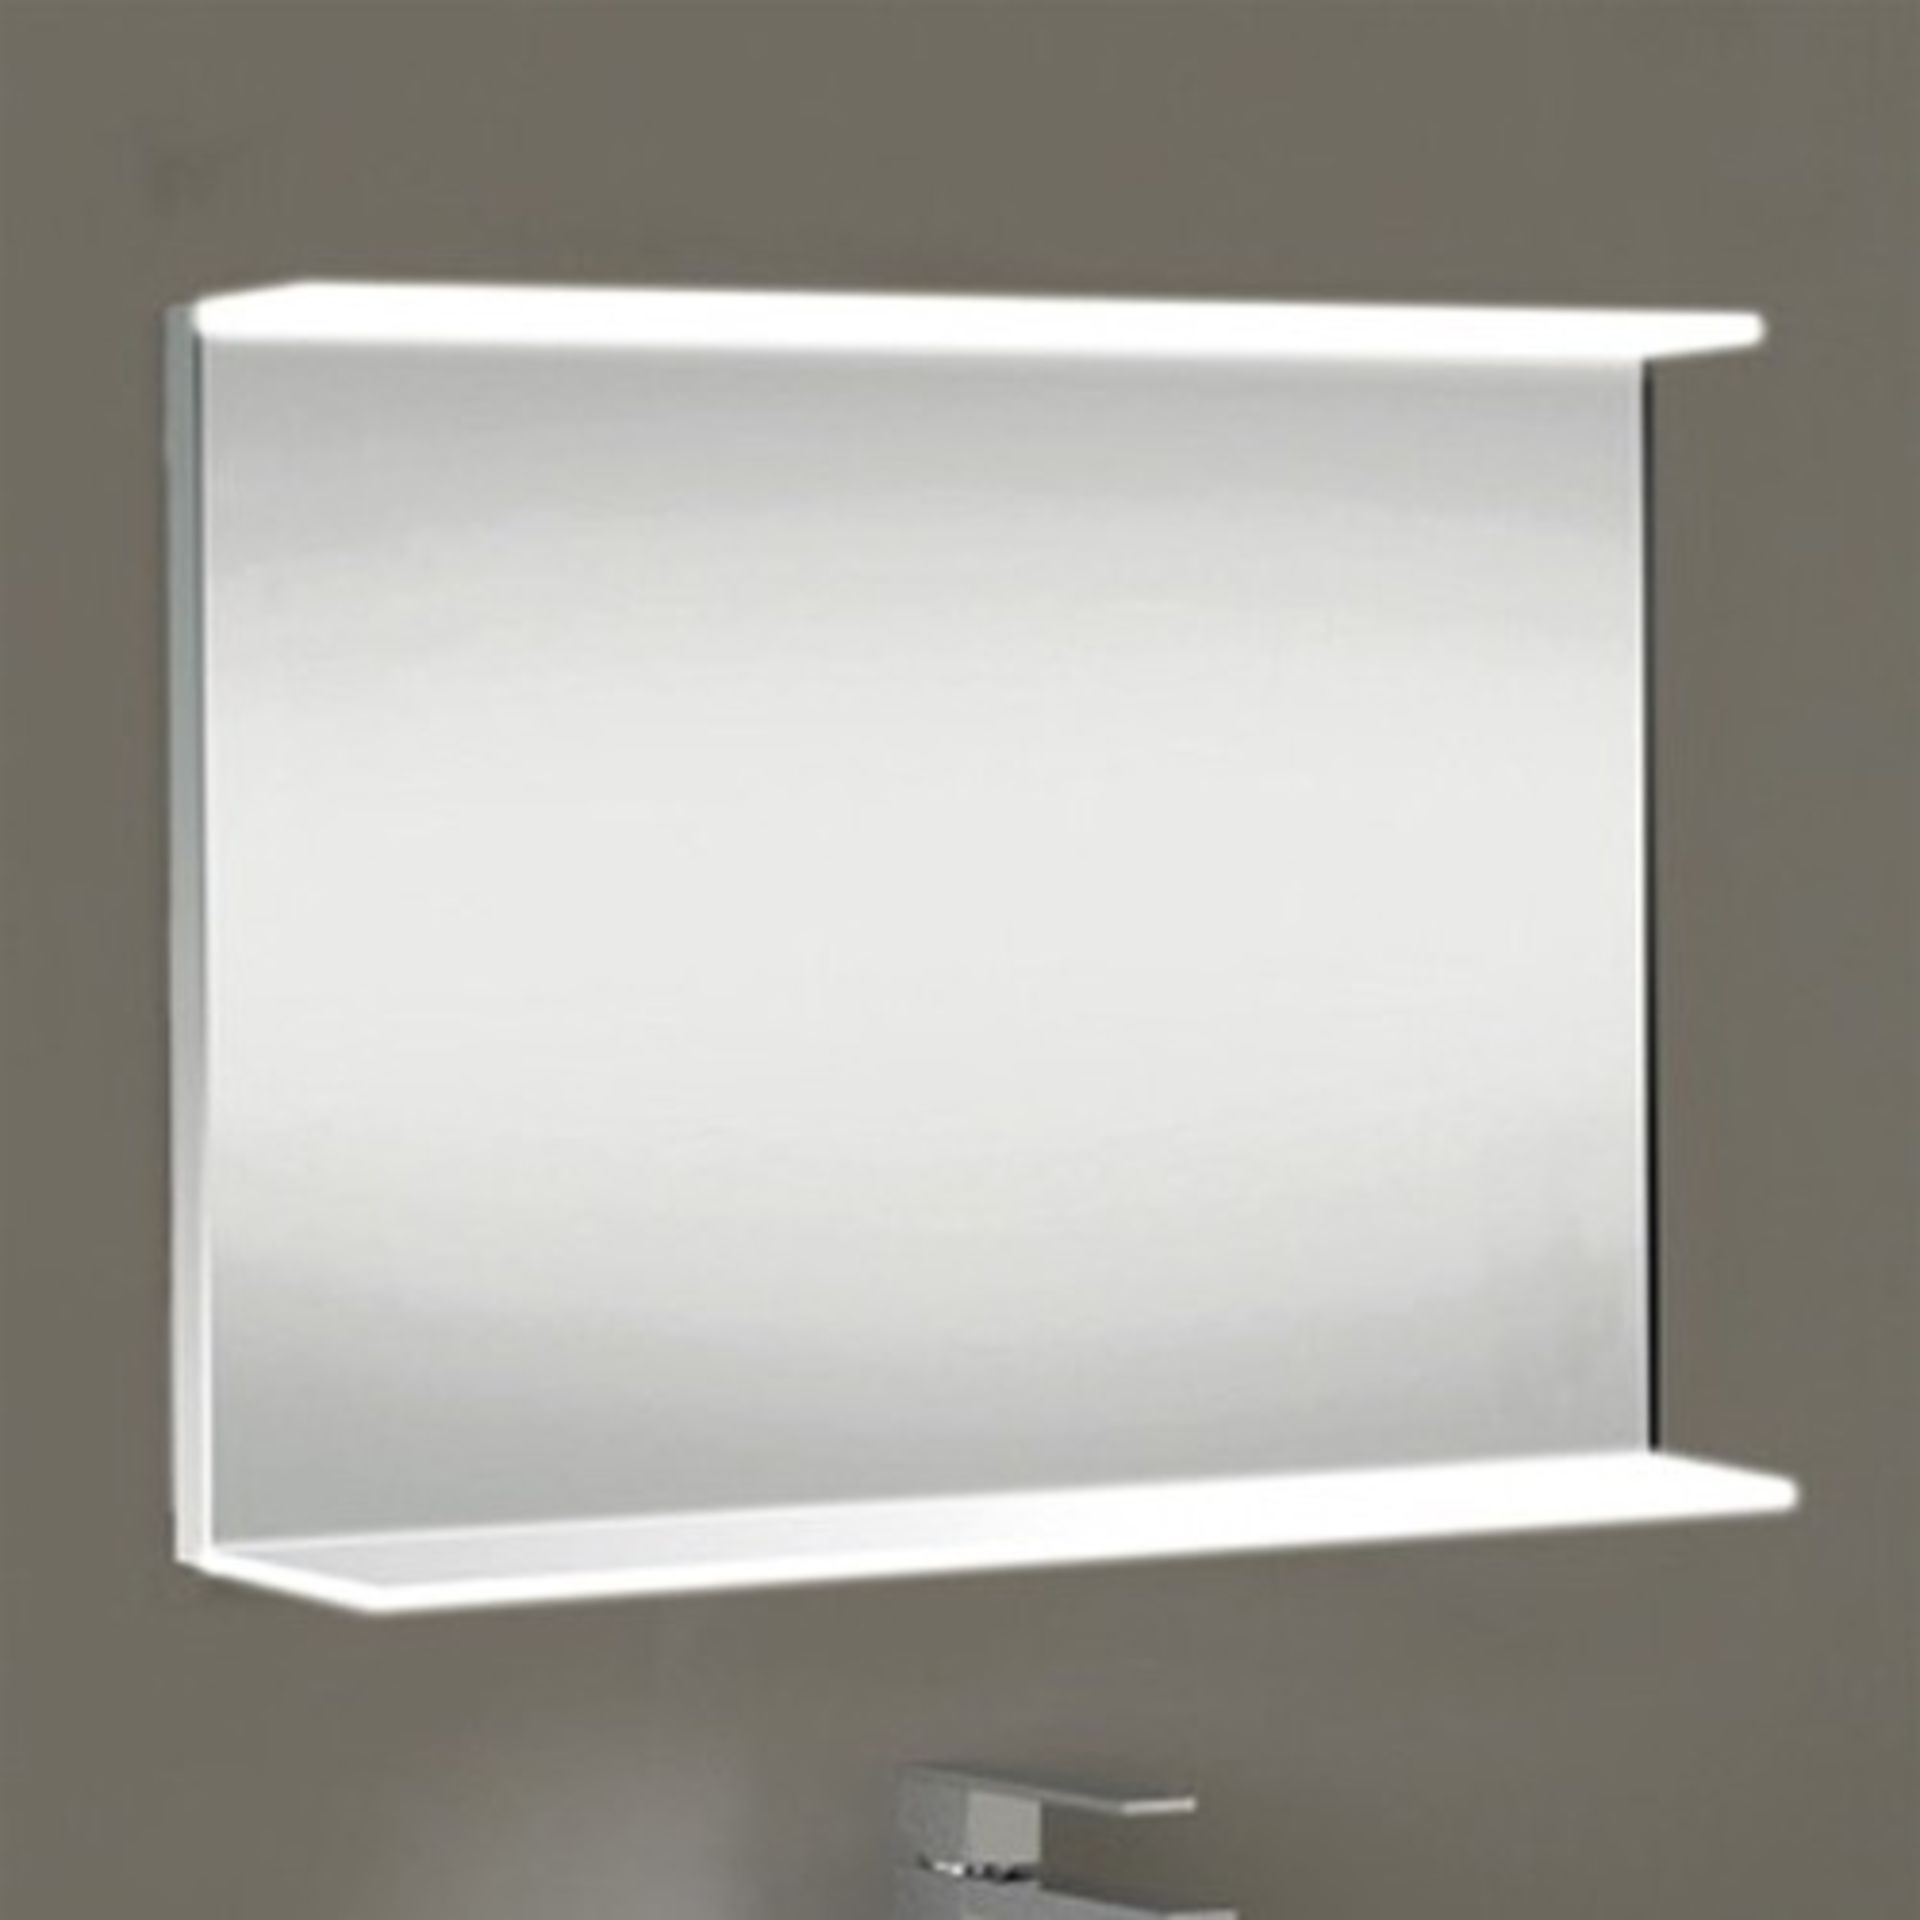 1 x Synergy Bologna Bathroom Mirror - IR Switch, Demister (800 x 800mm) - New & Boxed Stock